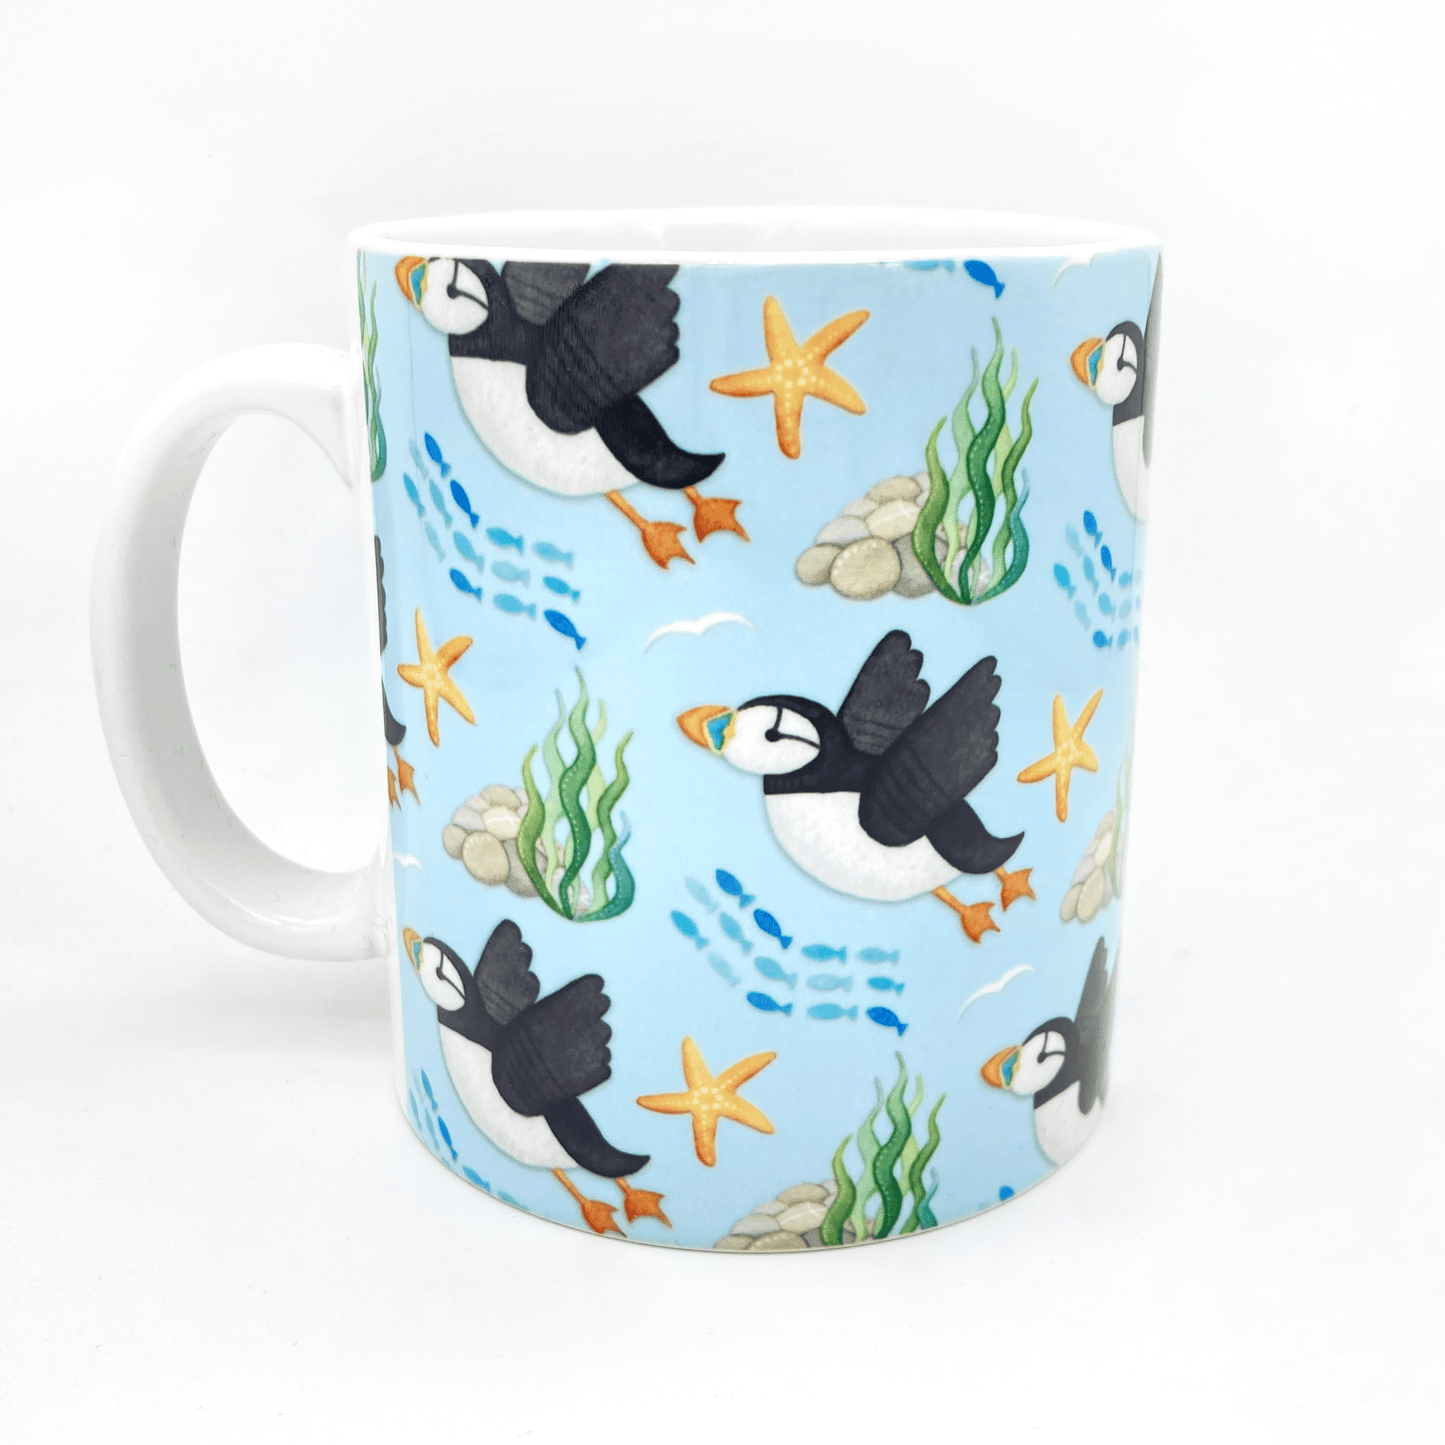 Puffin Pattern Mug - Flying Puffins - Seaside Ceramic Mug - East Neuk Beach Crafts